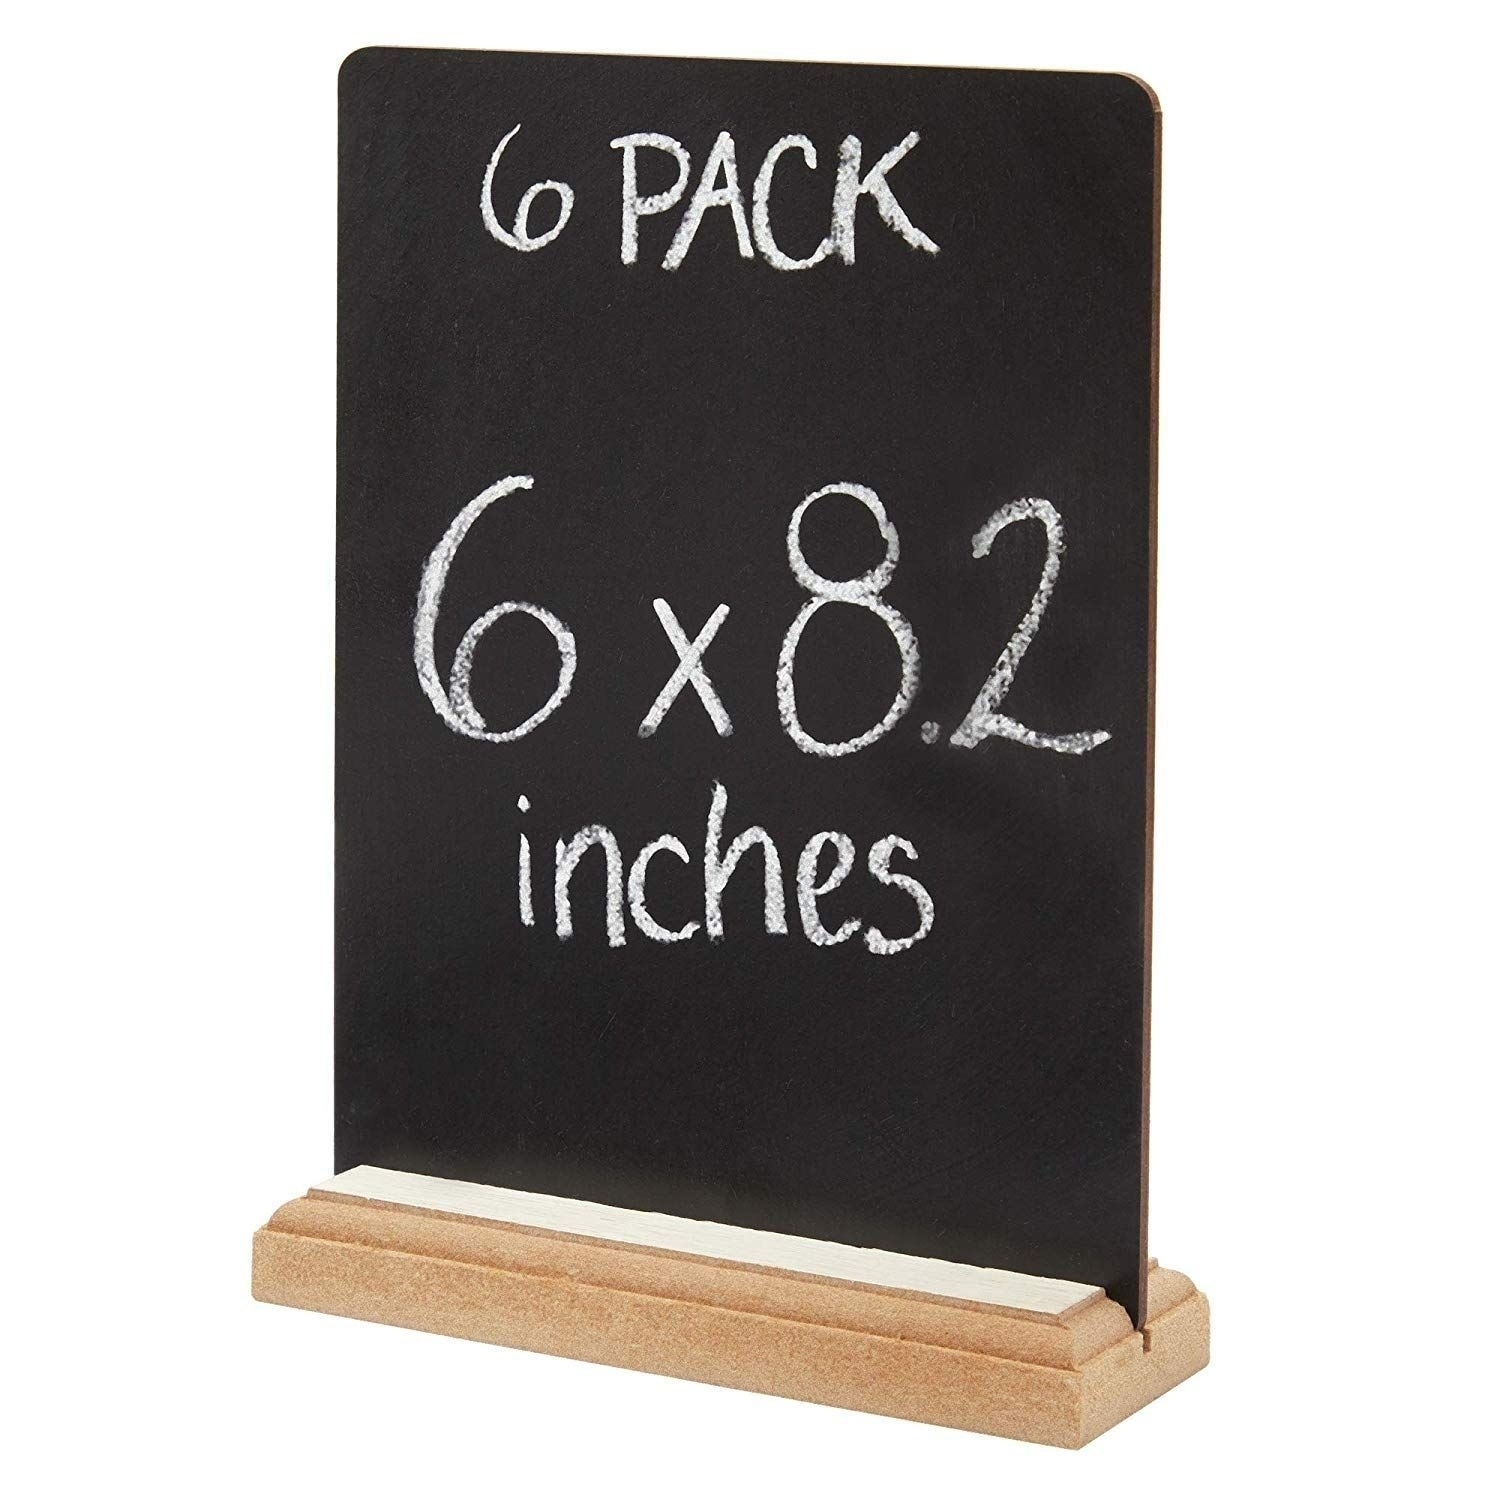 Details about   5.9"x 8" x 2.4" Desk Wooden Message Blackboard Tabletop Chalkboard with Base 